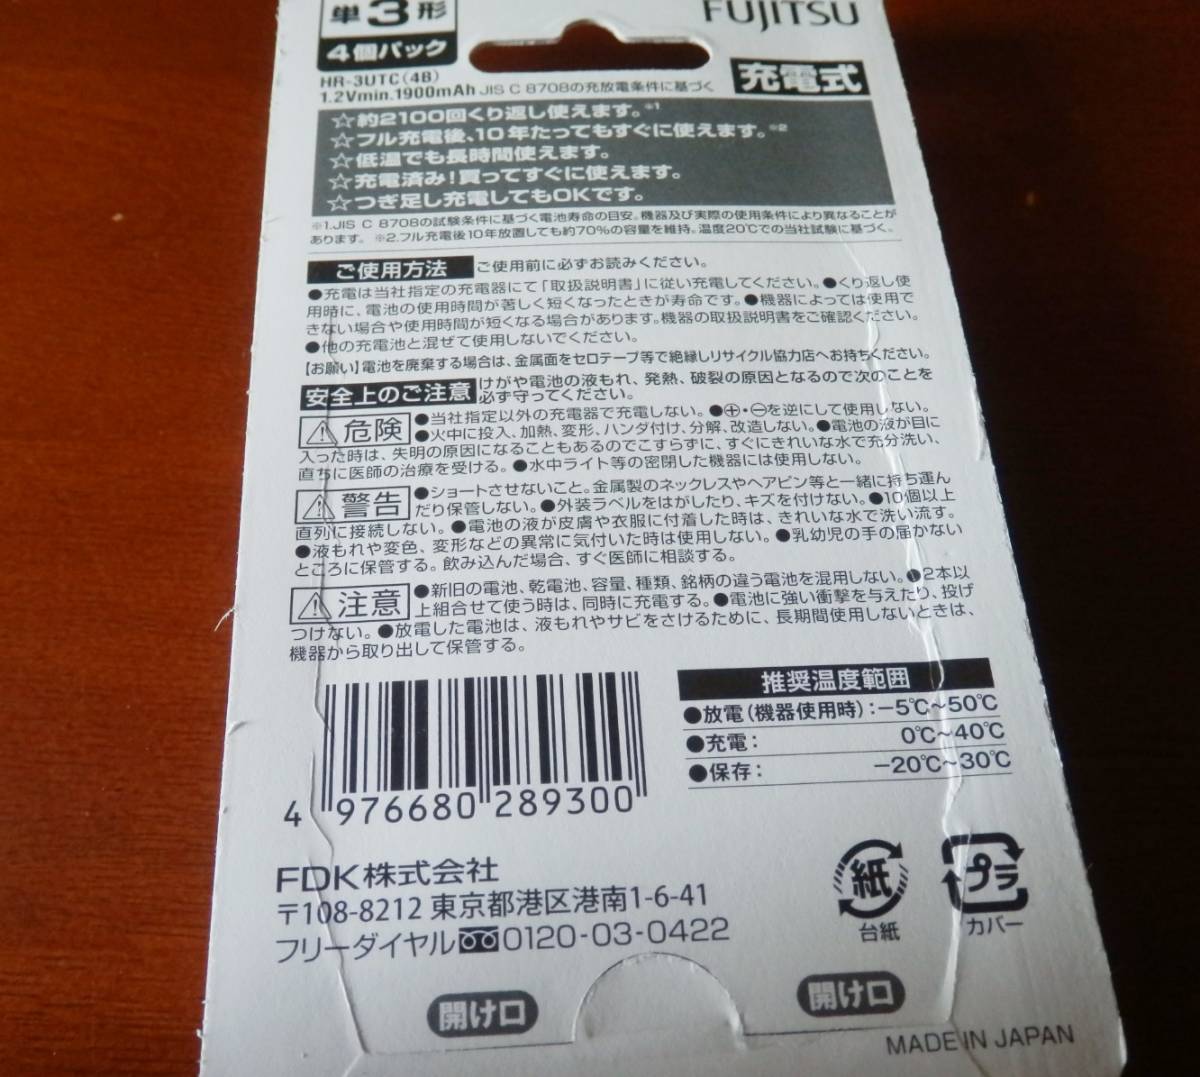  Fujitsu made in Japan single 3 nickel water element rechargeable battery min.1900mAh 4 pcs set eneloop Eneloop interchangeable HR-3UTC(4B) single three FDK unopened new goods 